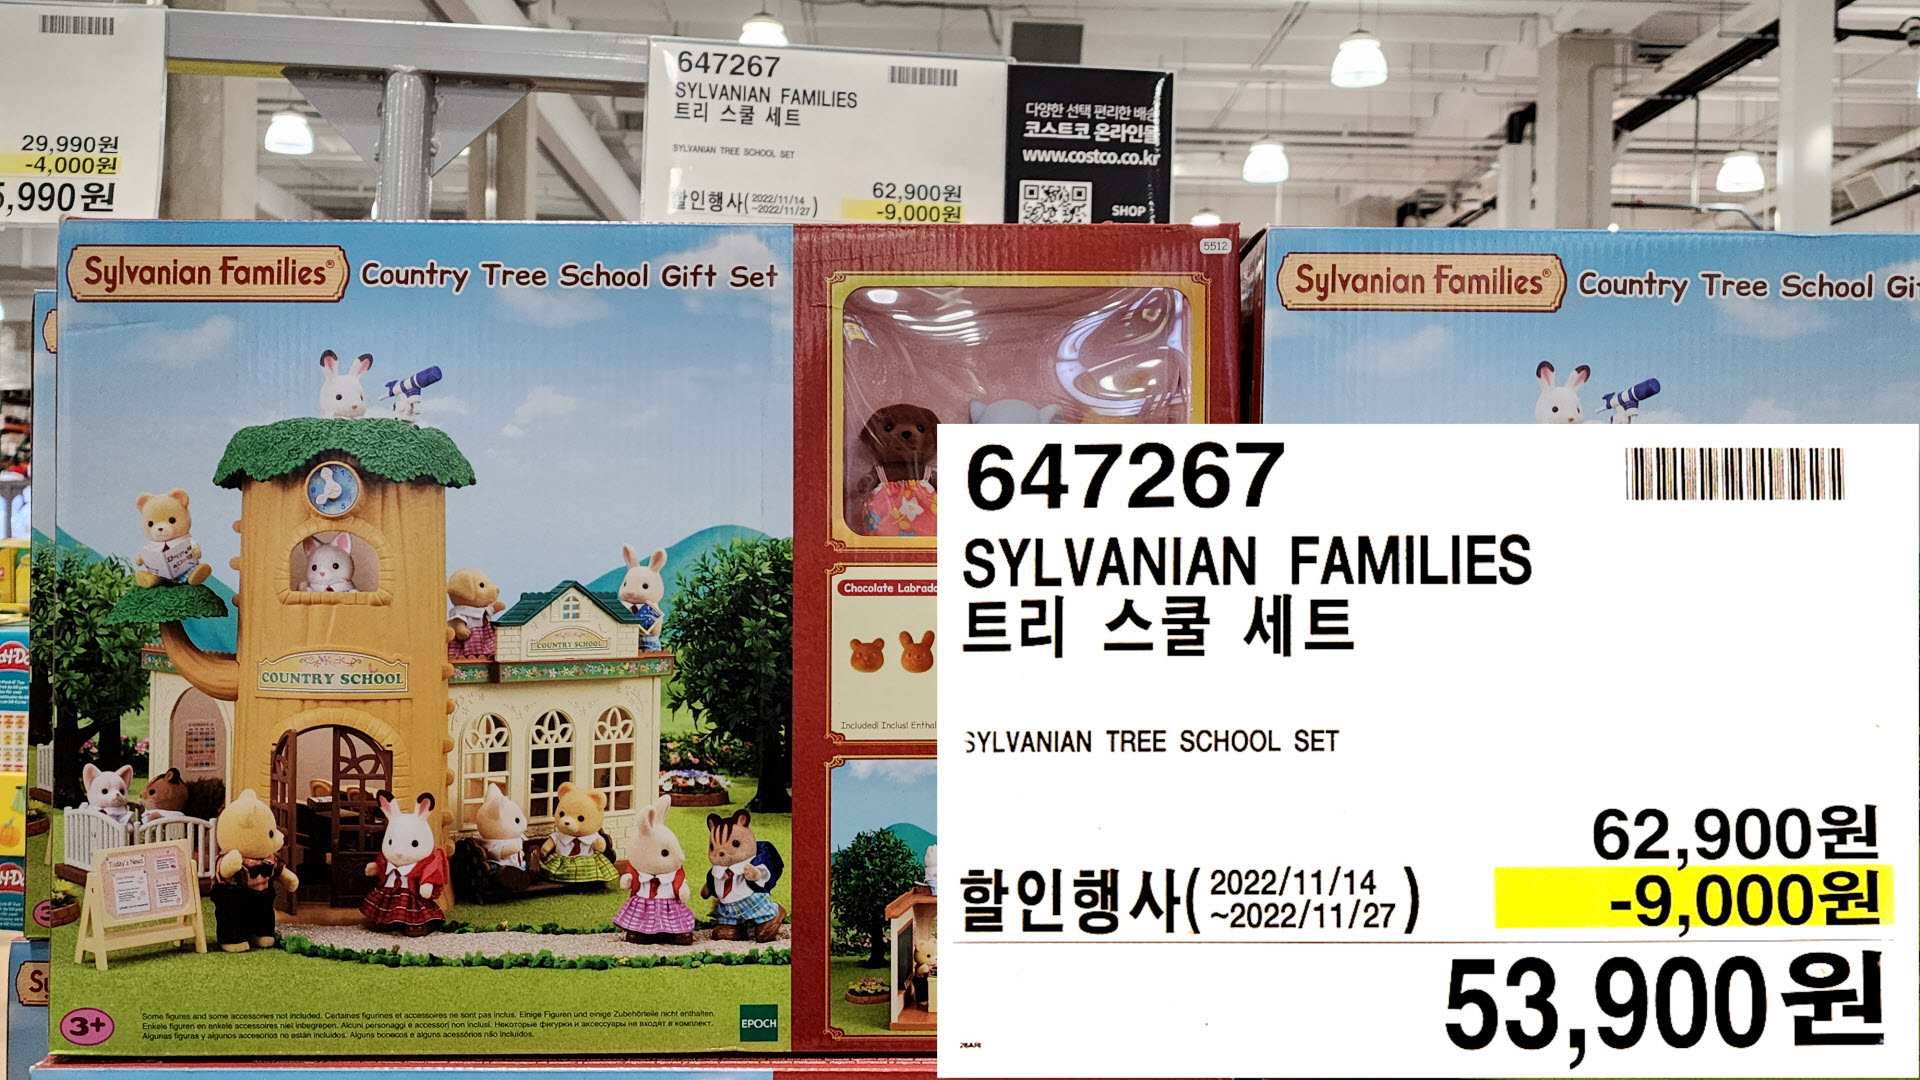 SYLVANIAN FAMILIES
트리 스쿨 세트
SYLVANIAN TREE SCHOOL SET
53&#44;900원